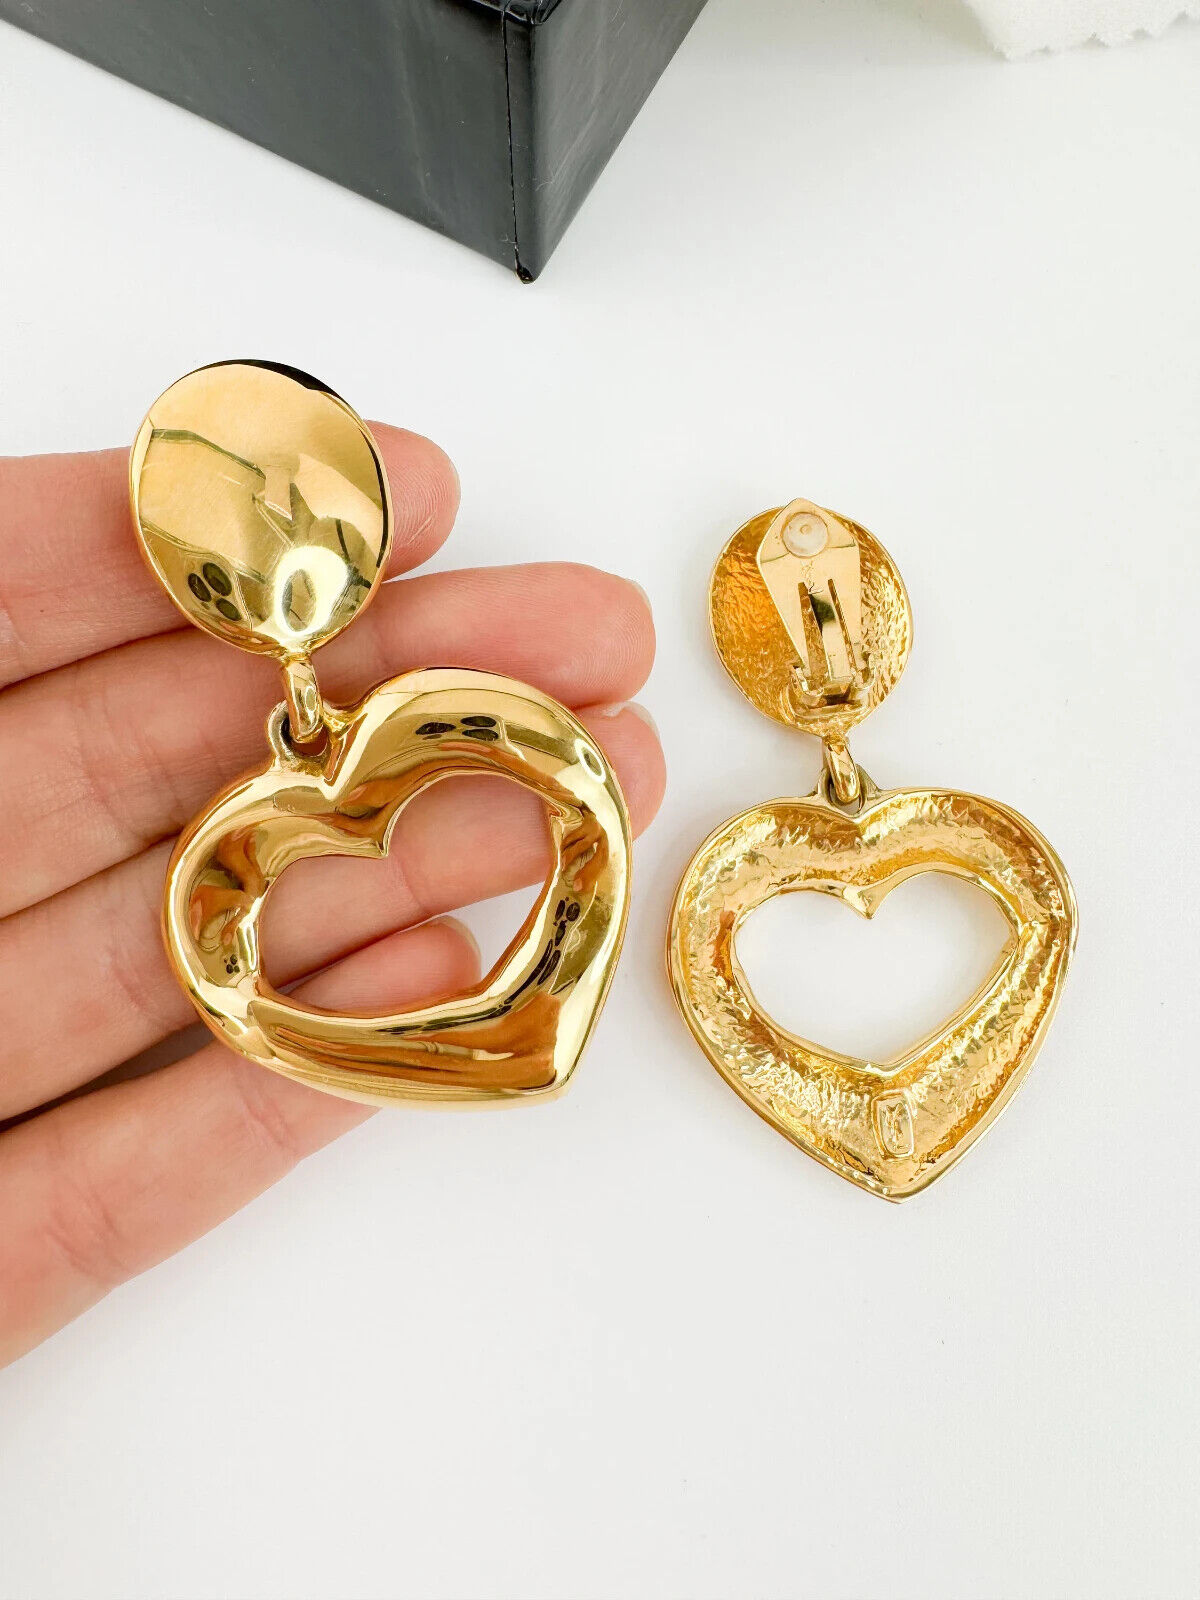 Yves Saint Laurent Heart Earrings  1990’s YSL Earrings Vintage Gold Tone Heart Openwork Earrings, Earrings Large, YSL Original Box Cards